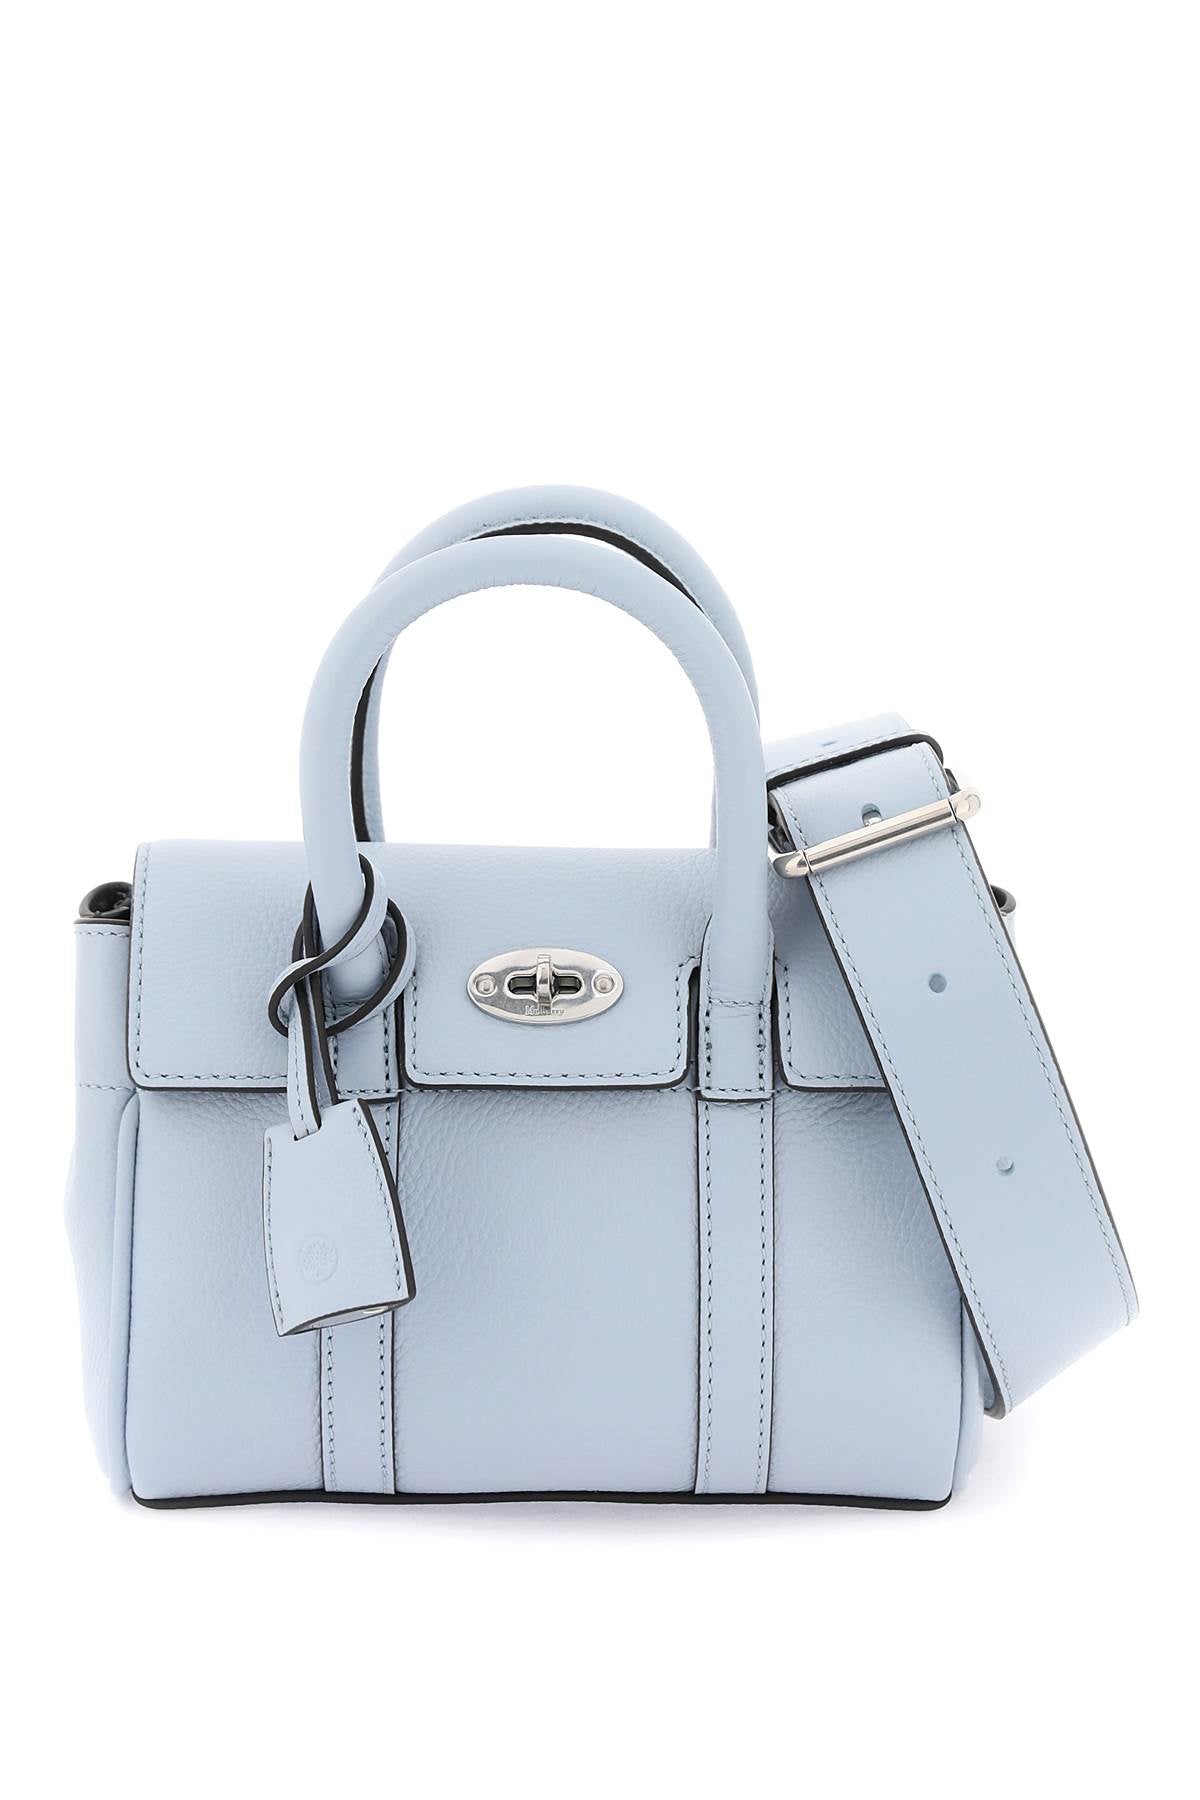 Shop Mulberry Light Blue Leather Bayswater Mini Handbag For Women